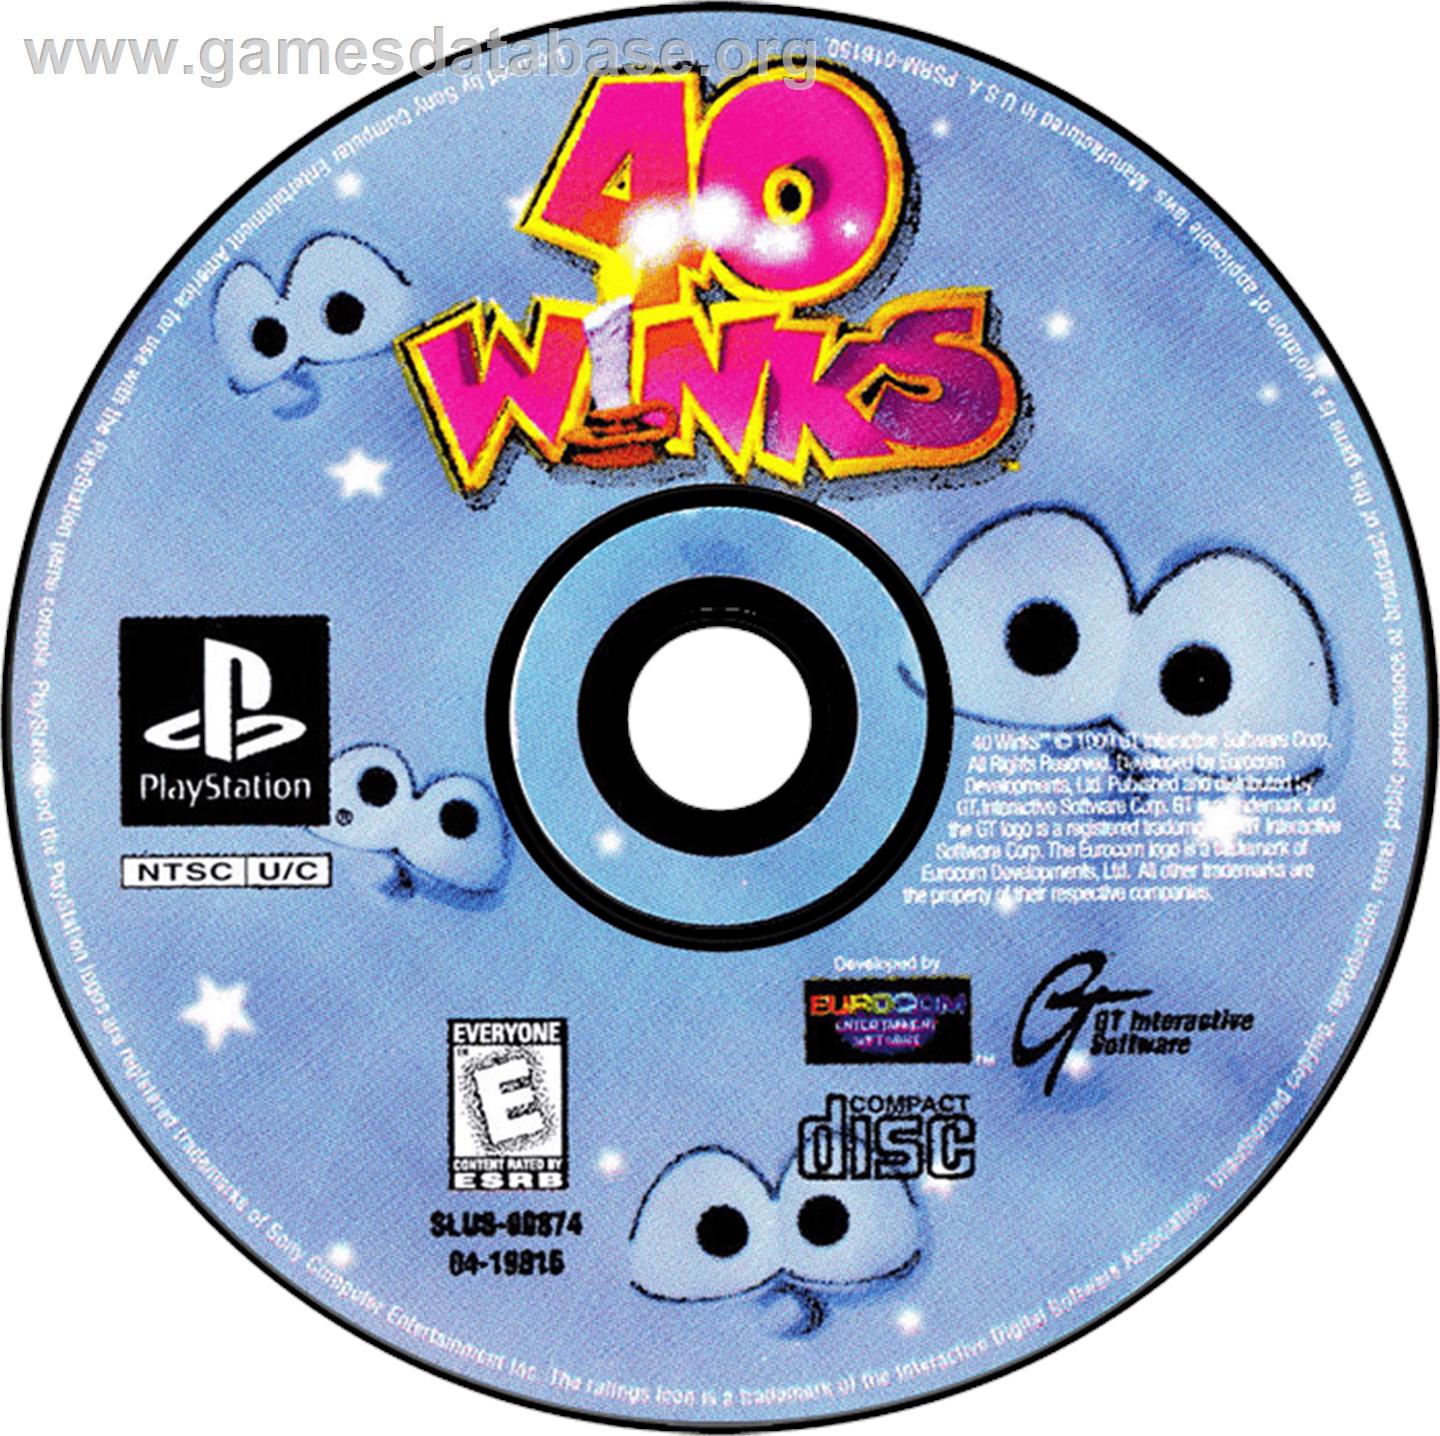 40 Winks - Sony Playstation - Artwork - Disc